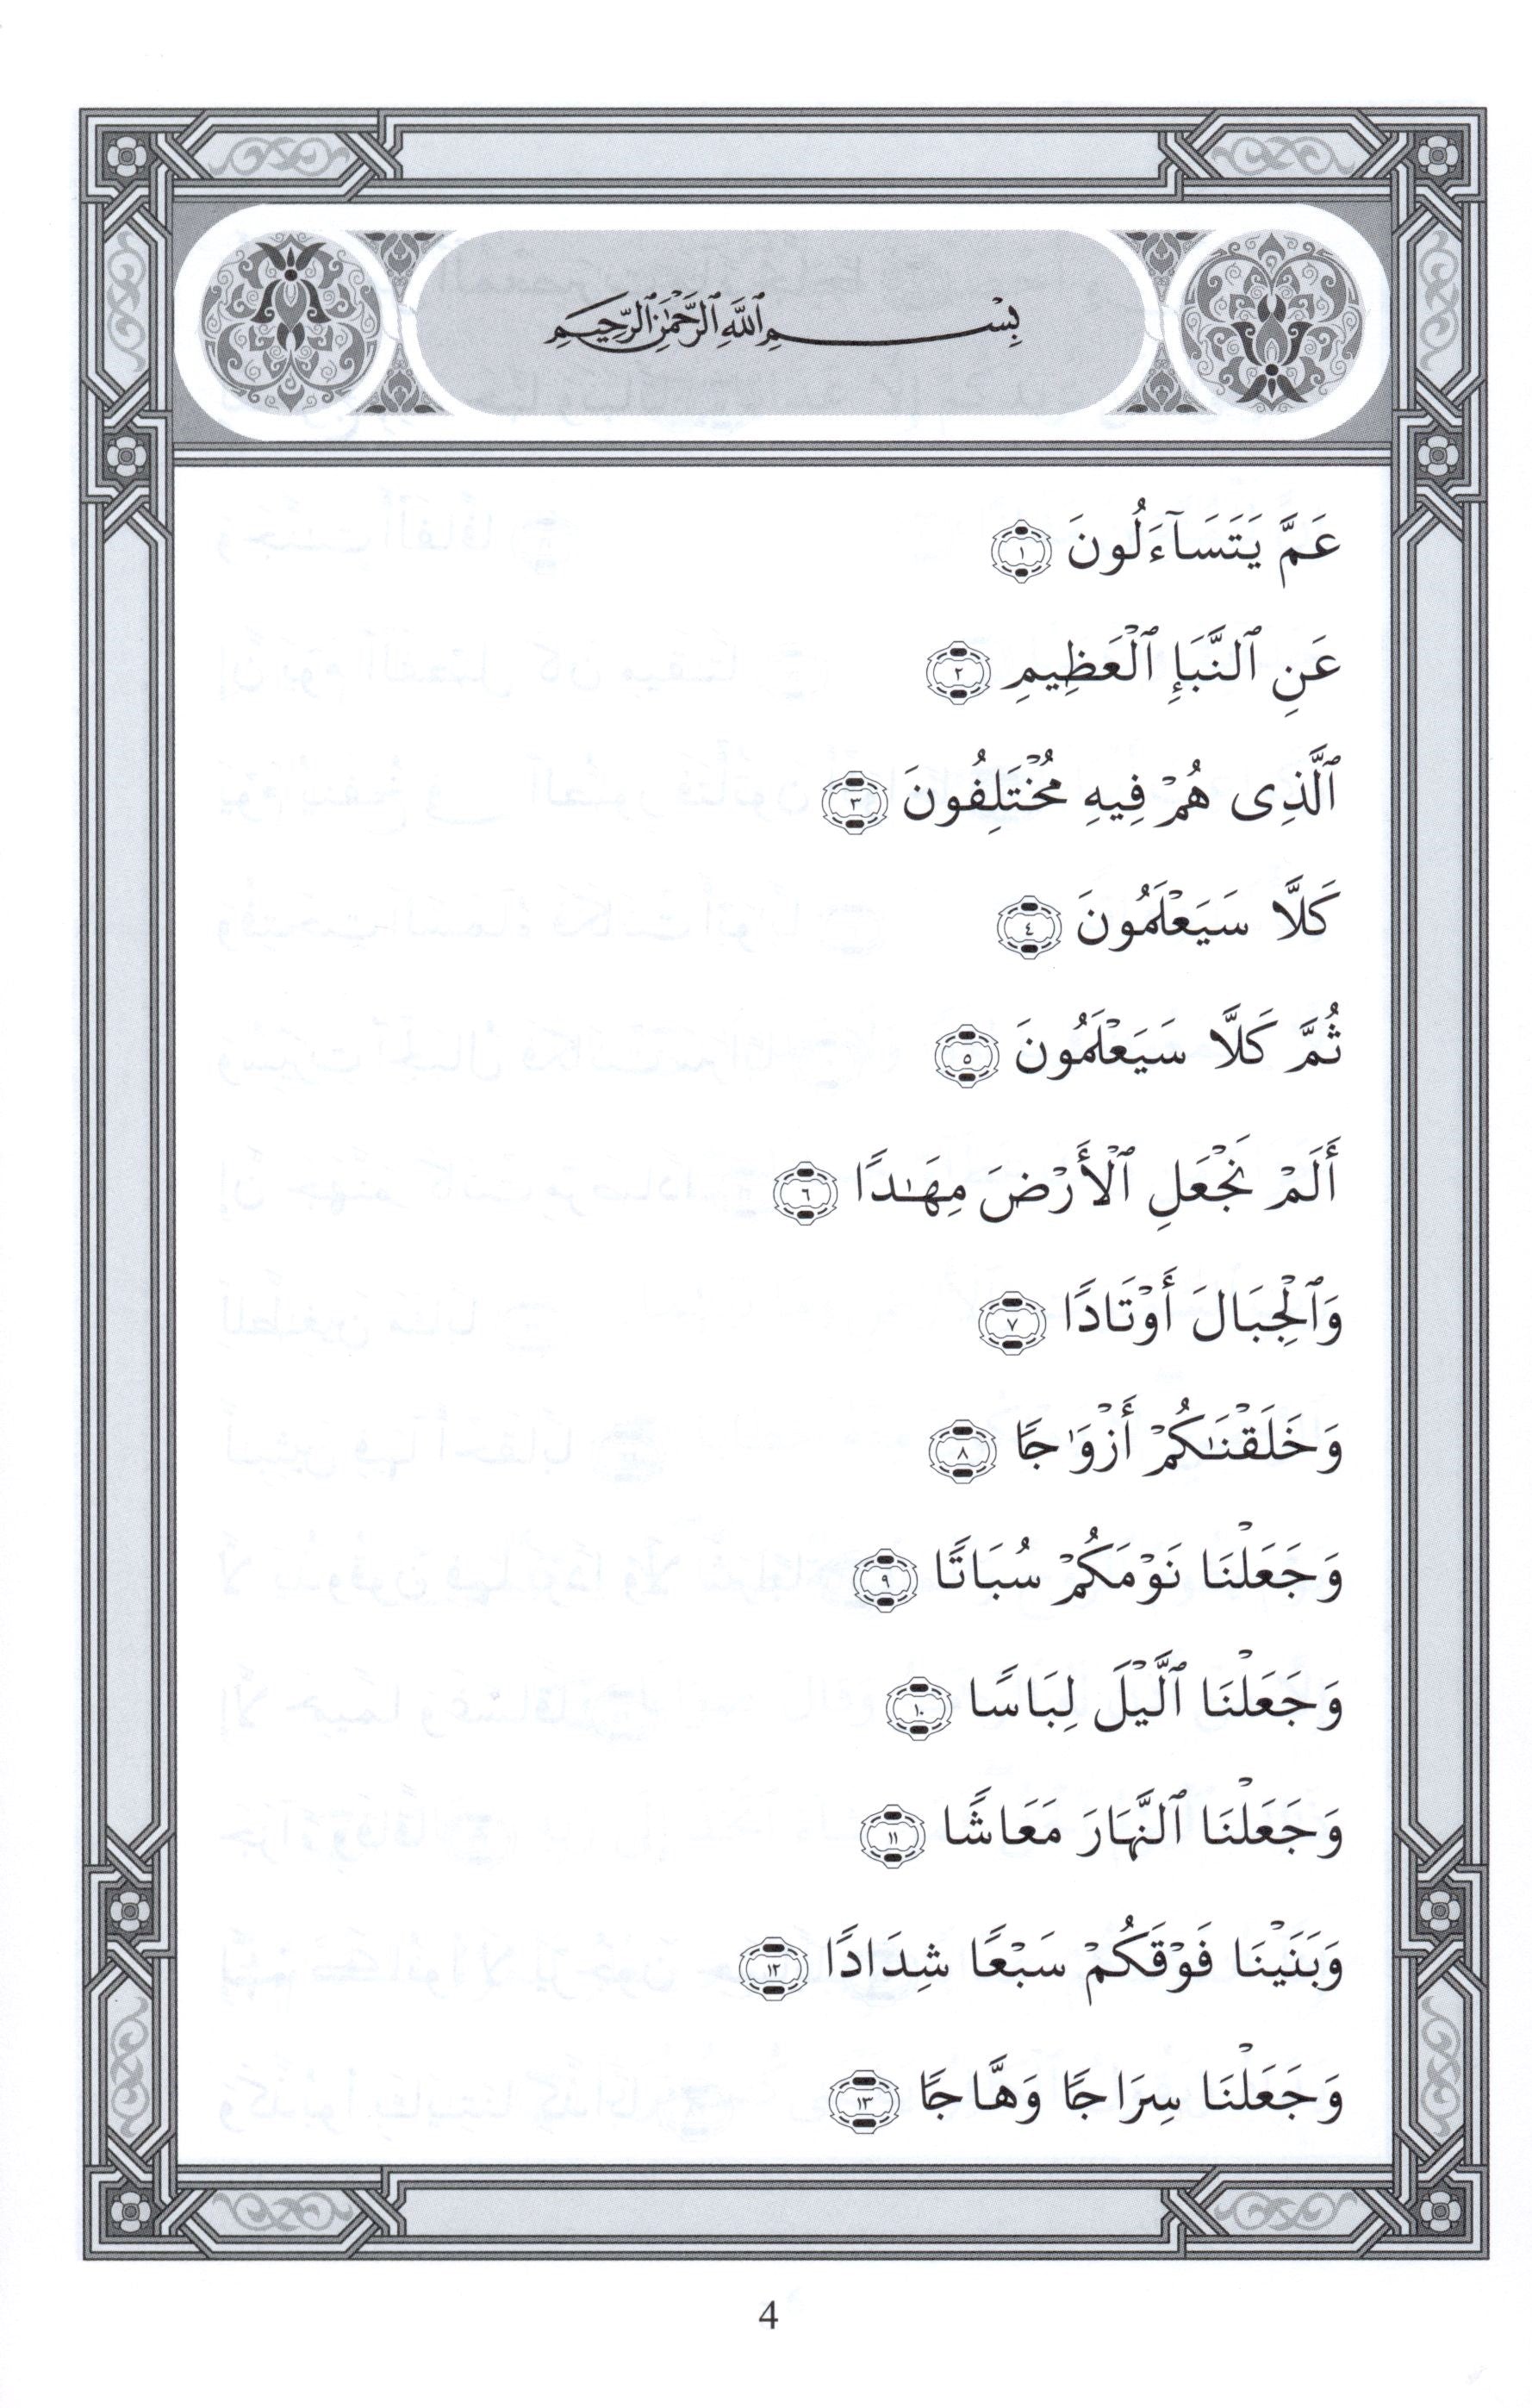 The Holy Qur'an for School Children (Juz 'Amma - Part 30)